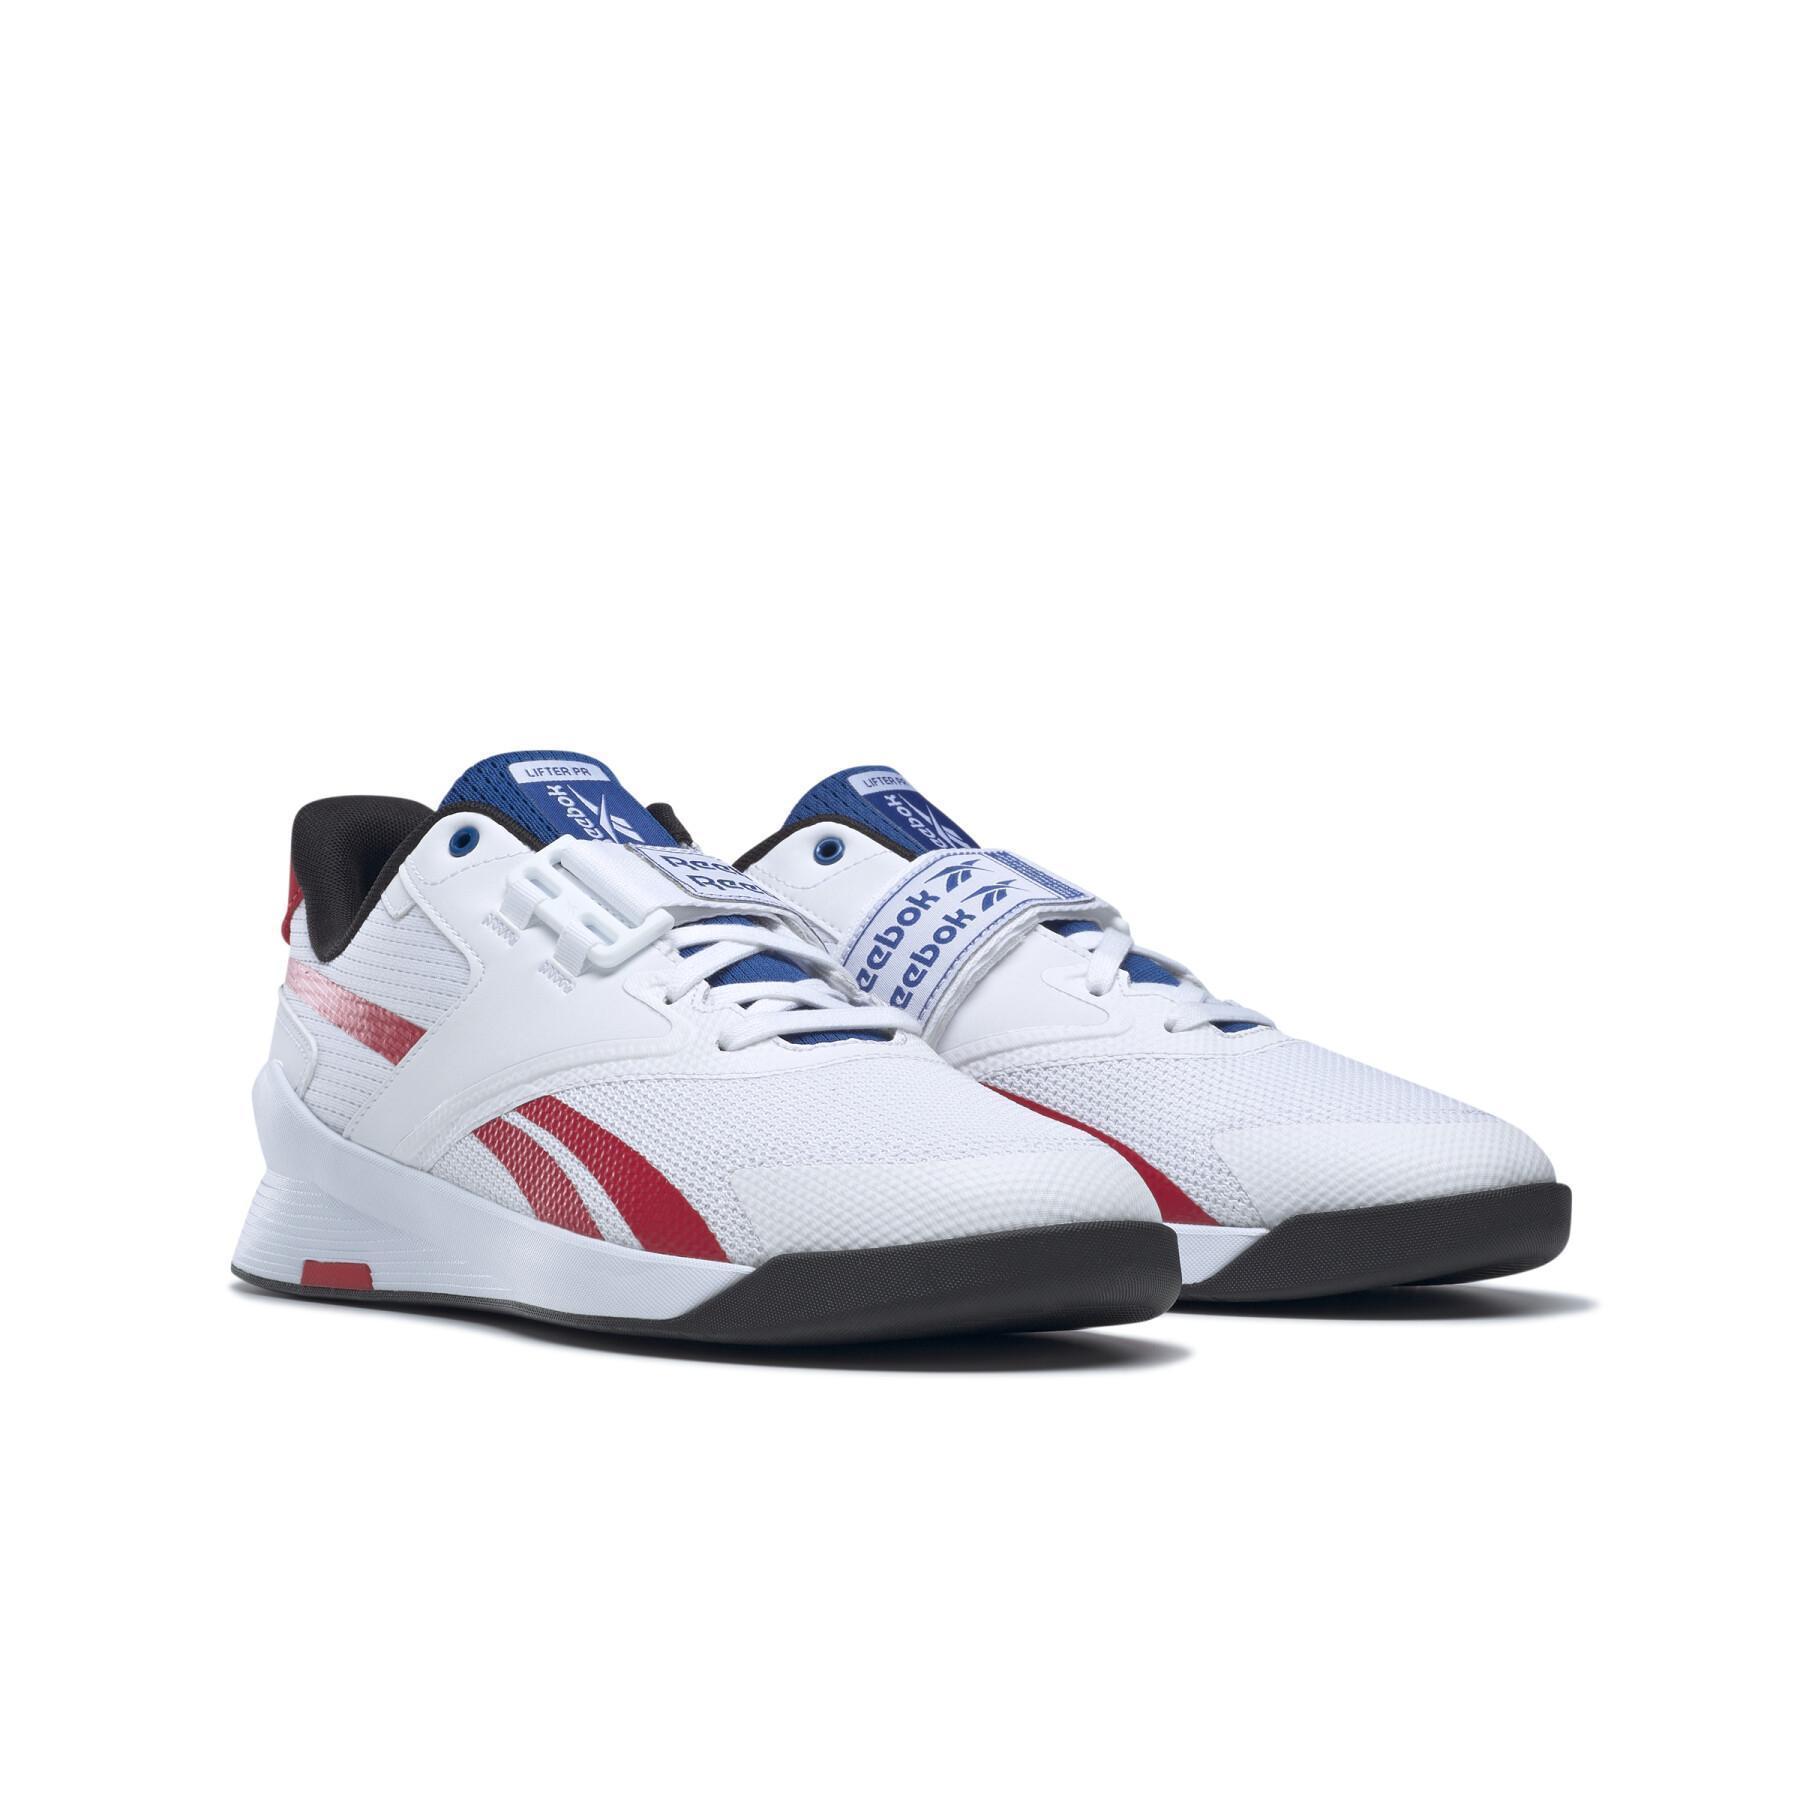 Athletic shoes Reebok Lifter PR II